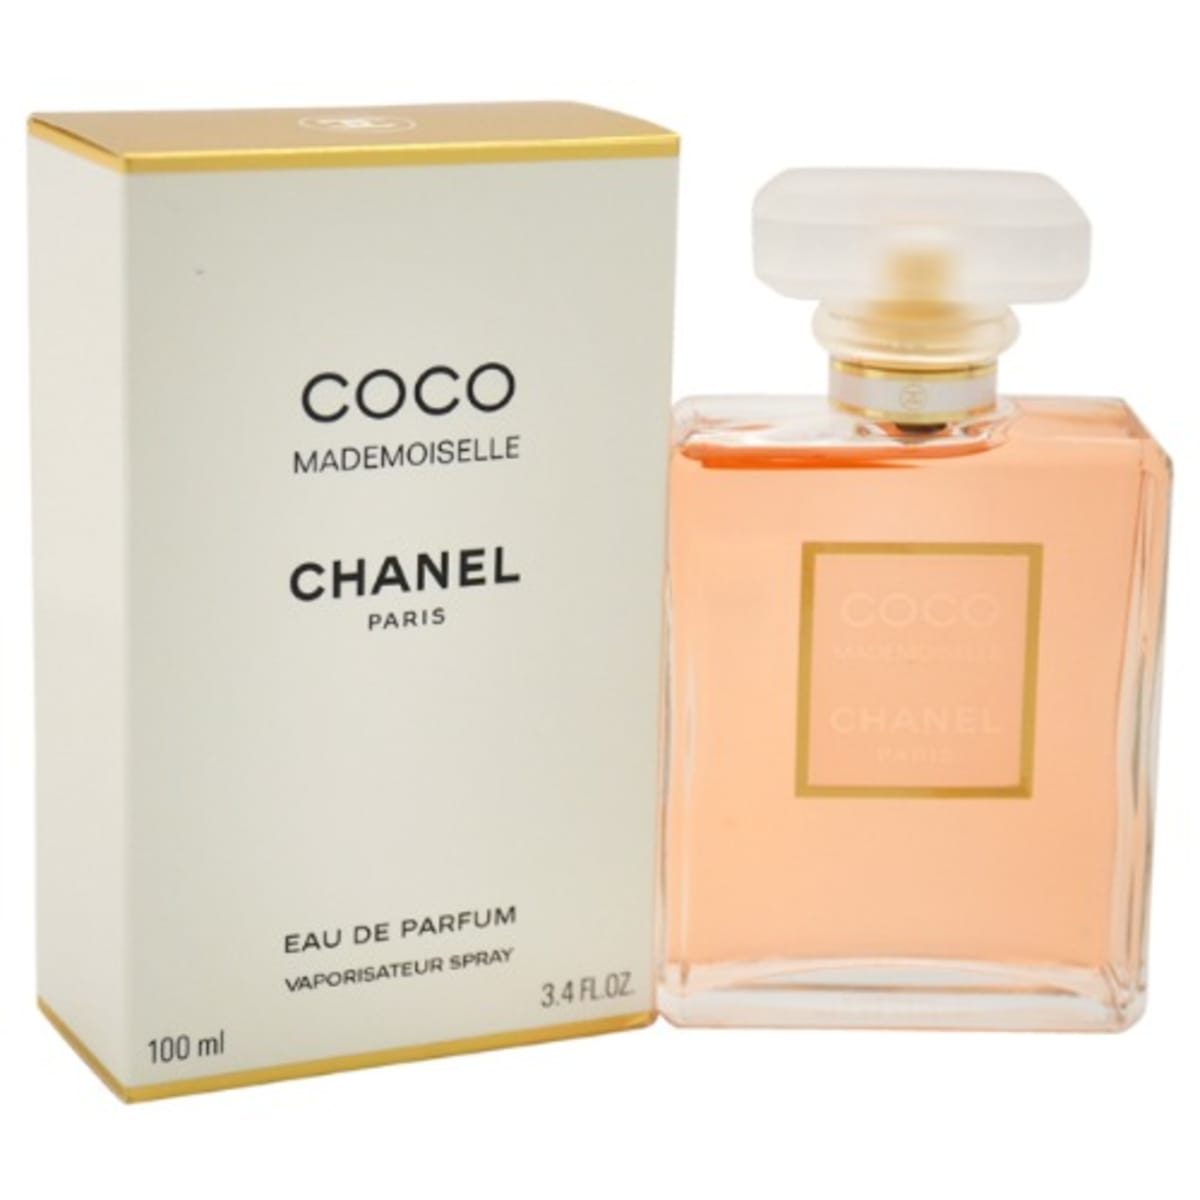 Chanel Coco Mademoiselle Edp Spray Perfume For Women - 3.4 Oz. (100ml)